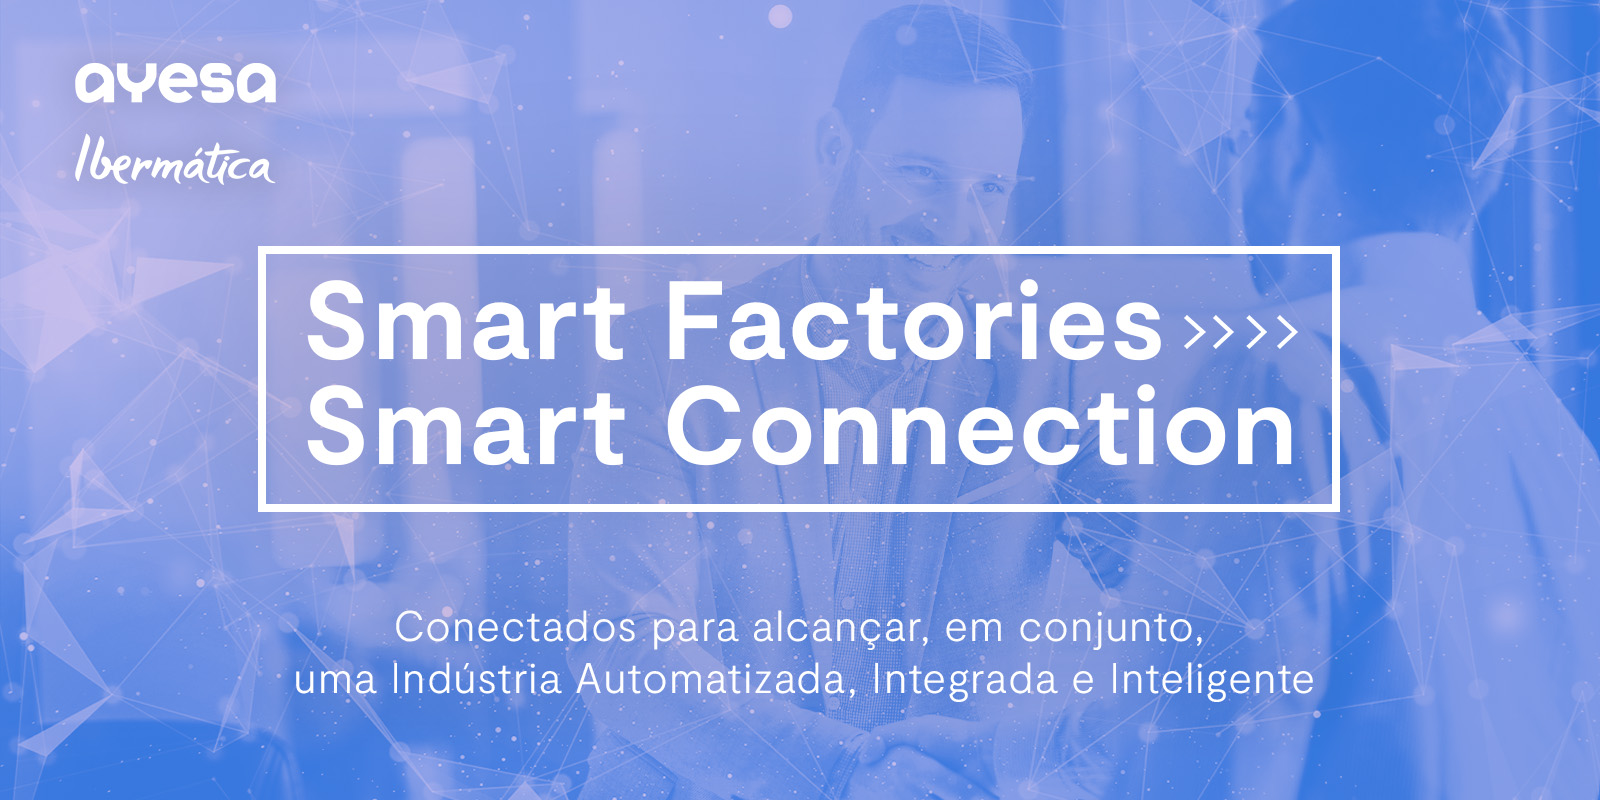 Ibermática an Ayesa company | Sala cheia no Evento “Smart Factories >> Smart Connection”